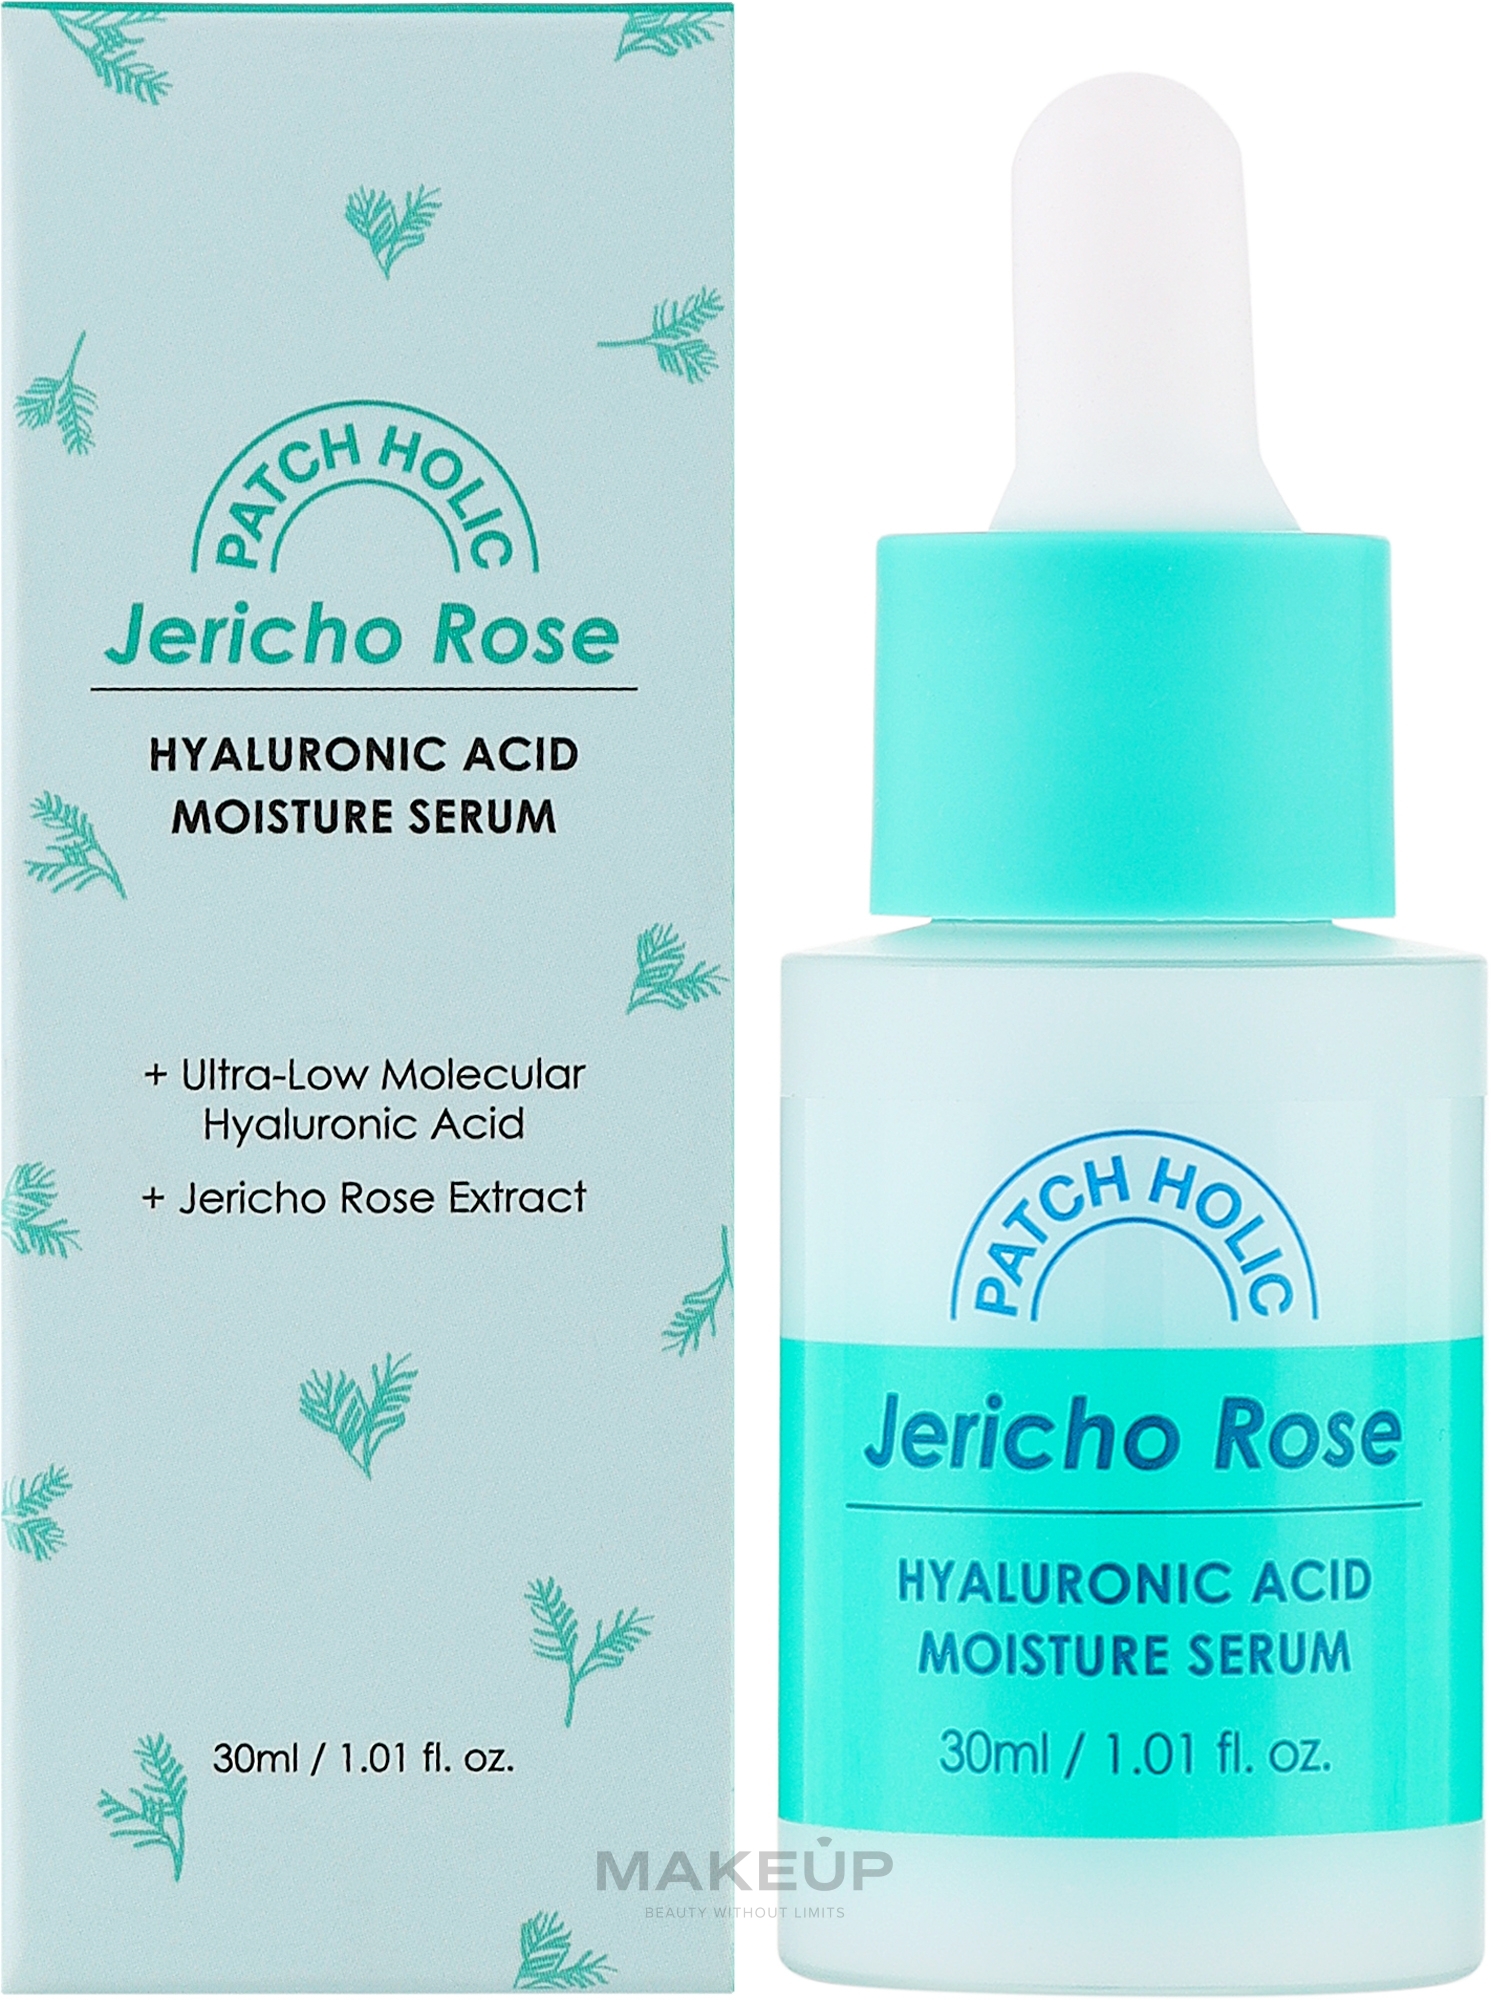 Увлажняющая сыворотка для лица - Patch Holic Jerico Rose Hyaluronic Acid Moisture Serum — фото 30ml